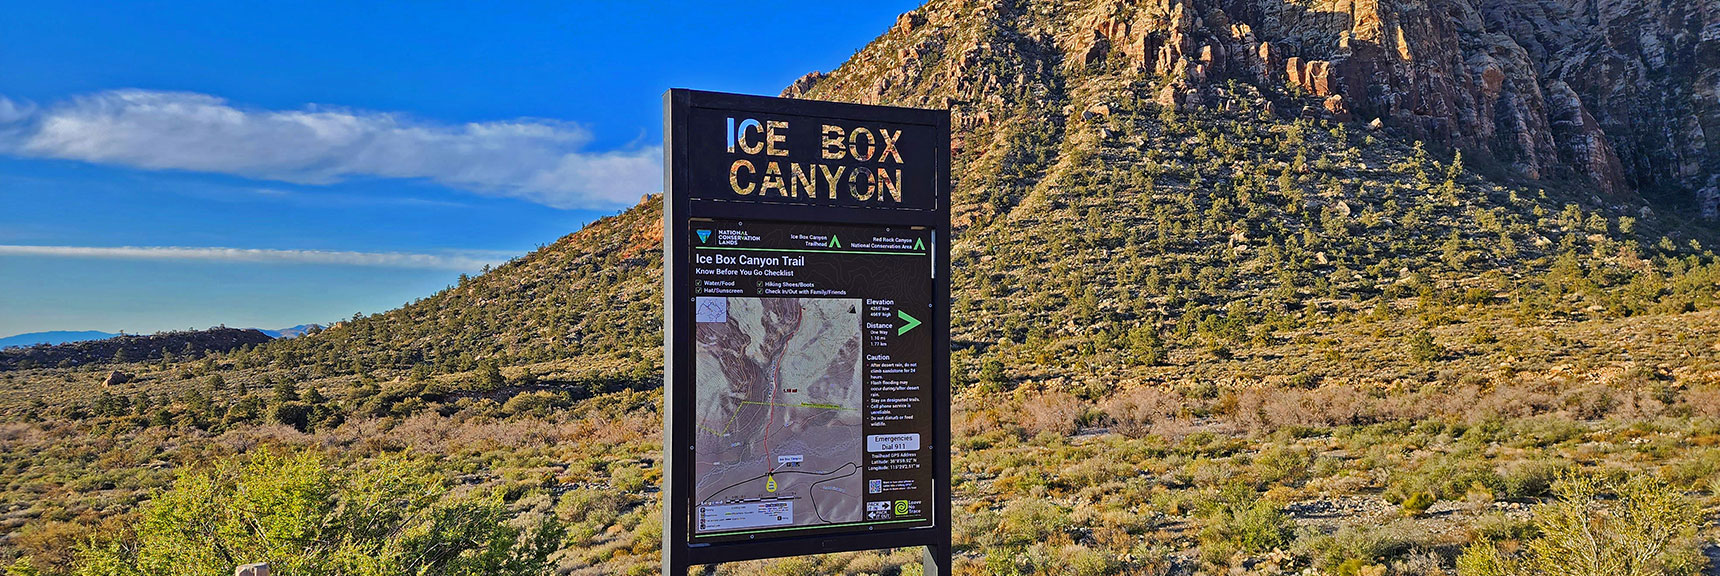 Ice Box Canyon Entrance Sign At Trailhead | Ice Box Canyon | Red Rock Canyon NCA, Nevada | Las Vegas Area Trails | David Smith